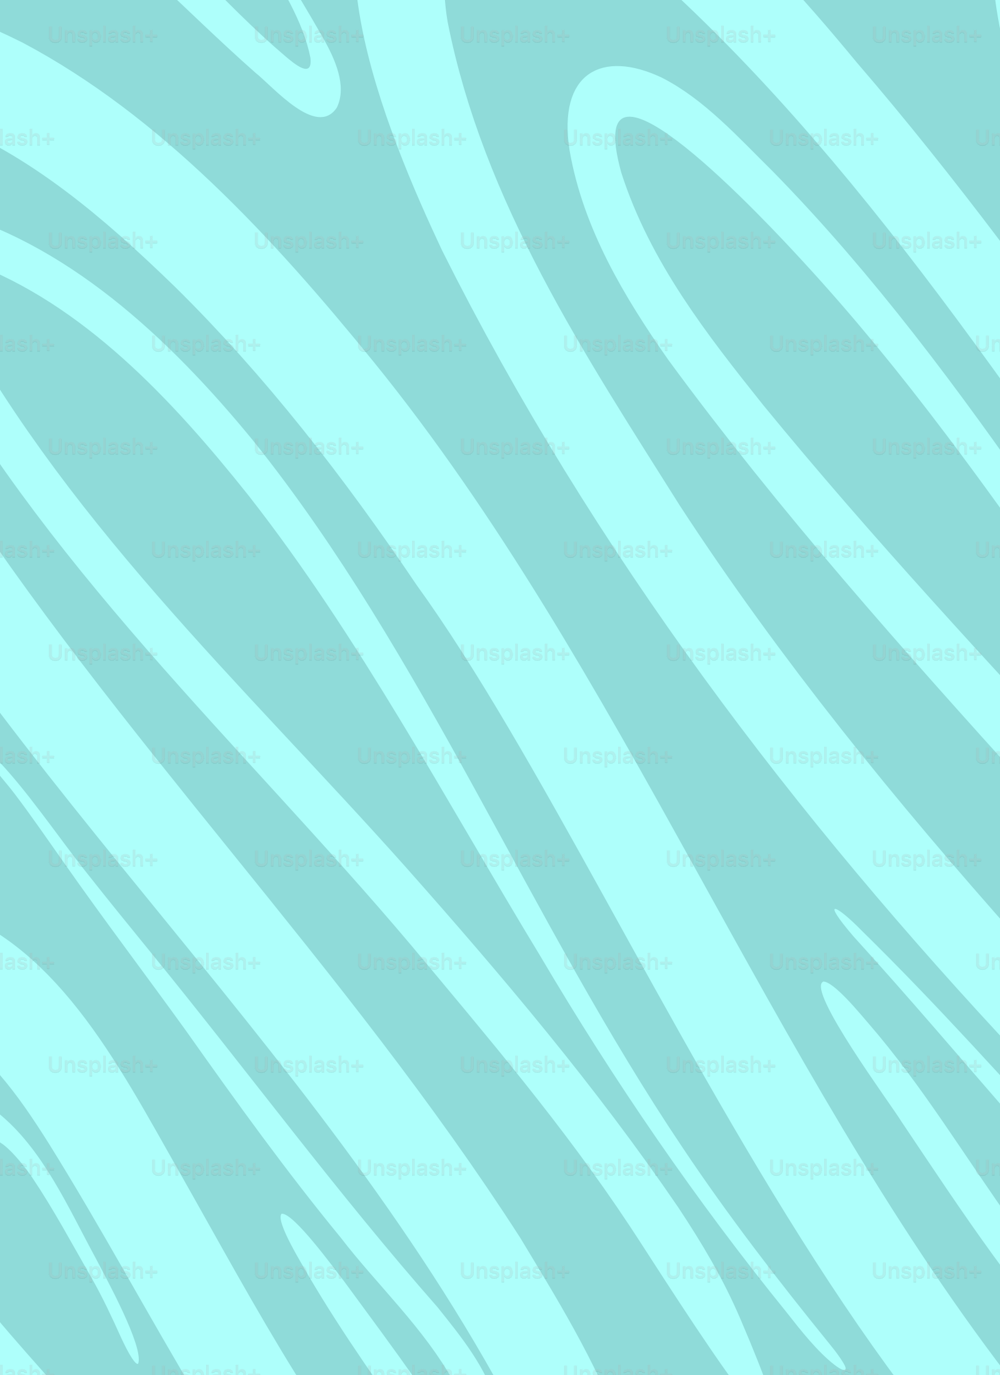 un fondo azul y verde con líneas onduladas